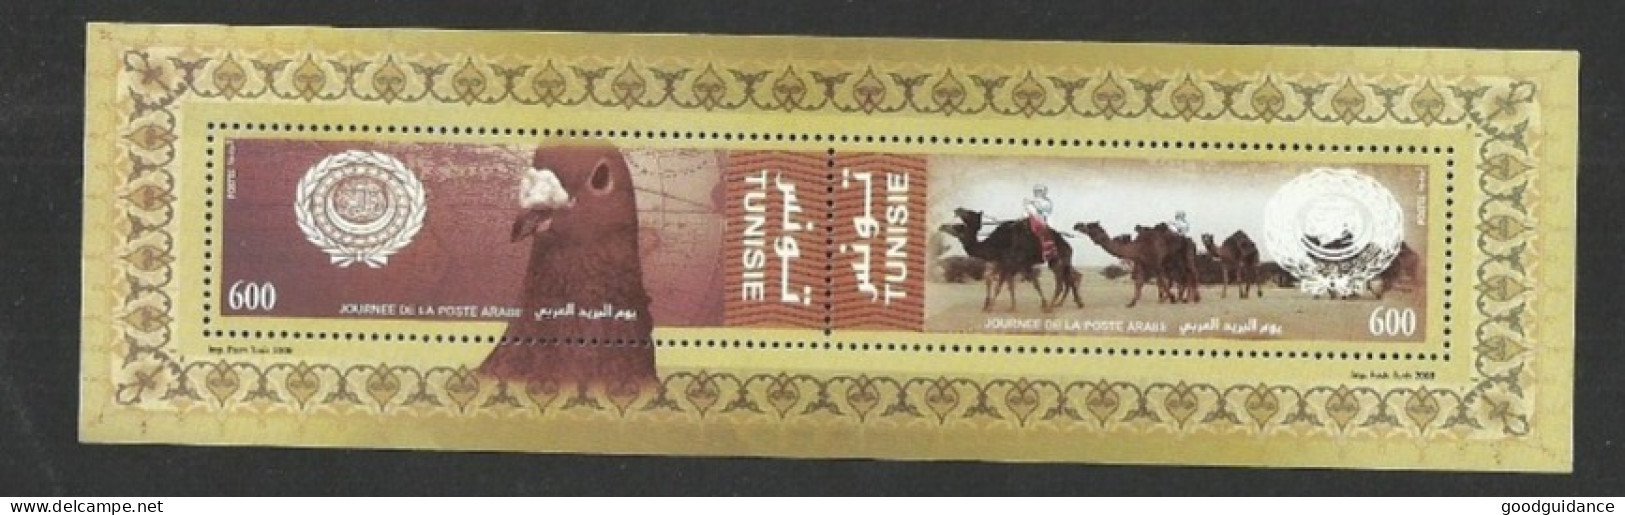 2008- Tunisia-  Minisheet  - Arab Post Day 2008 - Joint Issue - Bird - Camel - Desert - MNH** - Arabie Saoudite